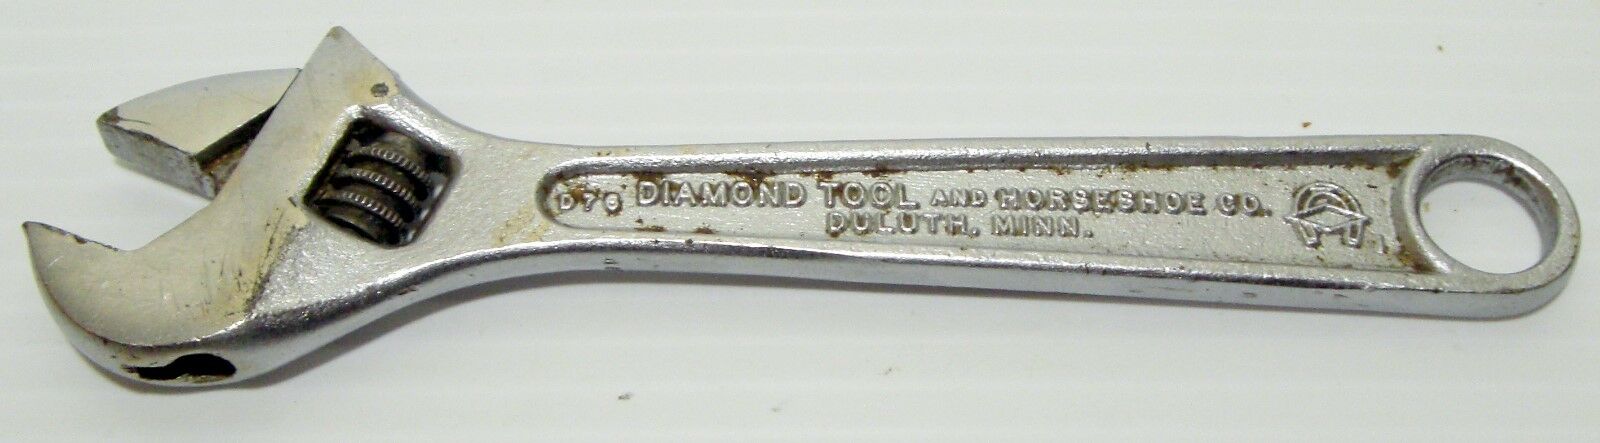 Vintage Diamond Tool & Horseshoe Co. 6” Crescent Wrench No. D76